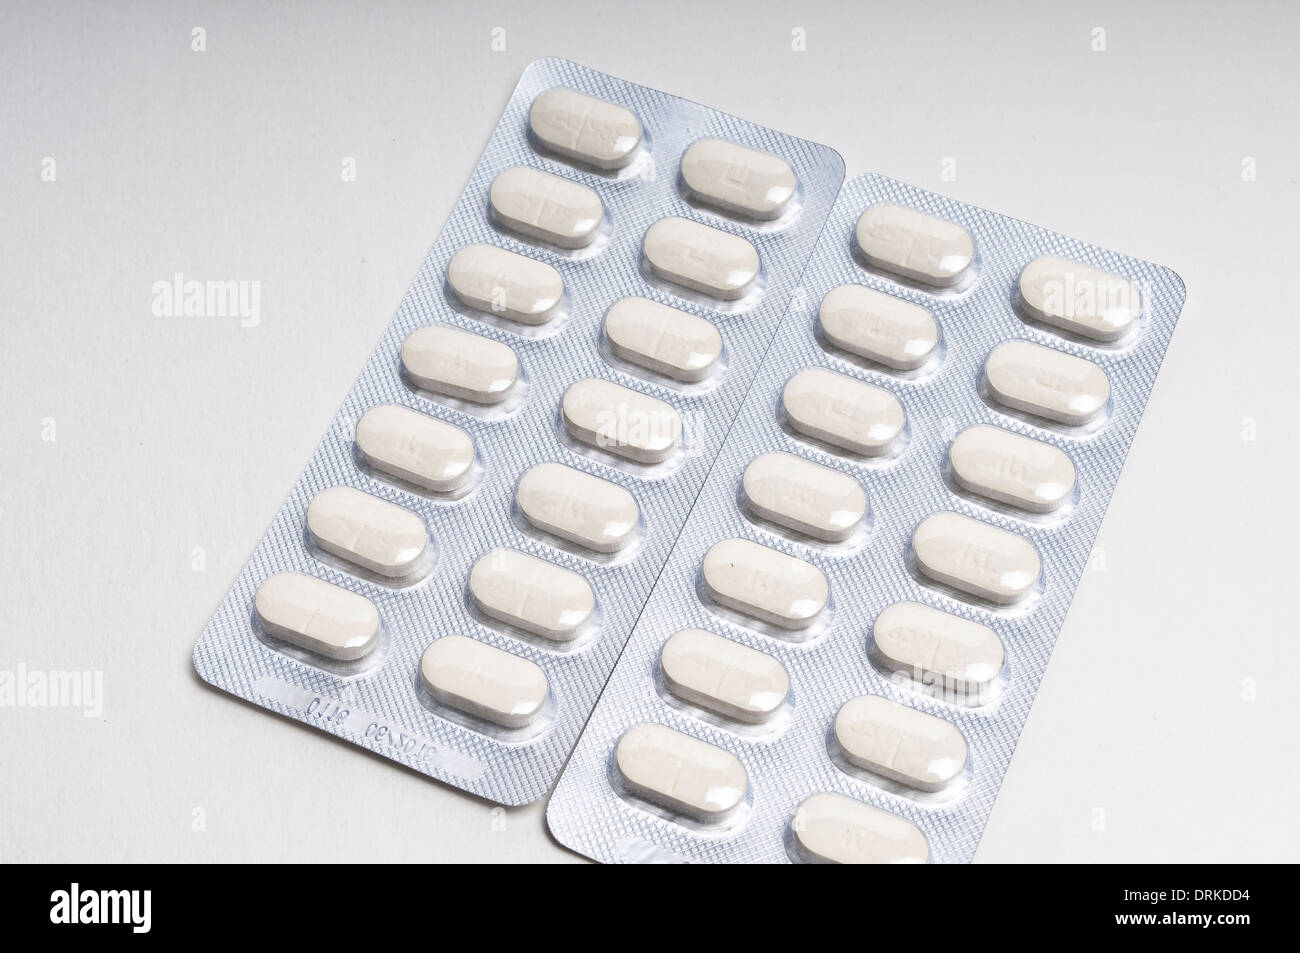 Naproxen tablets used to treat arthritis Stock Photo